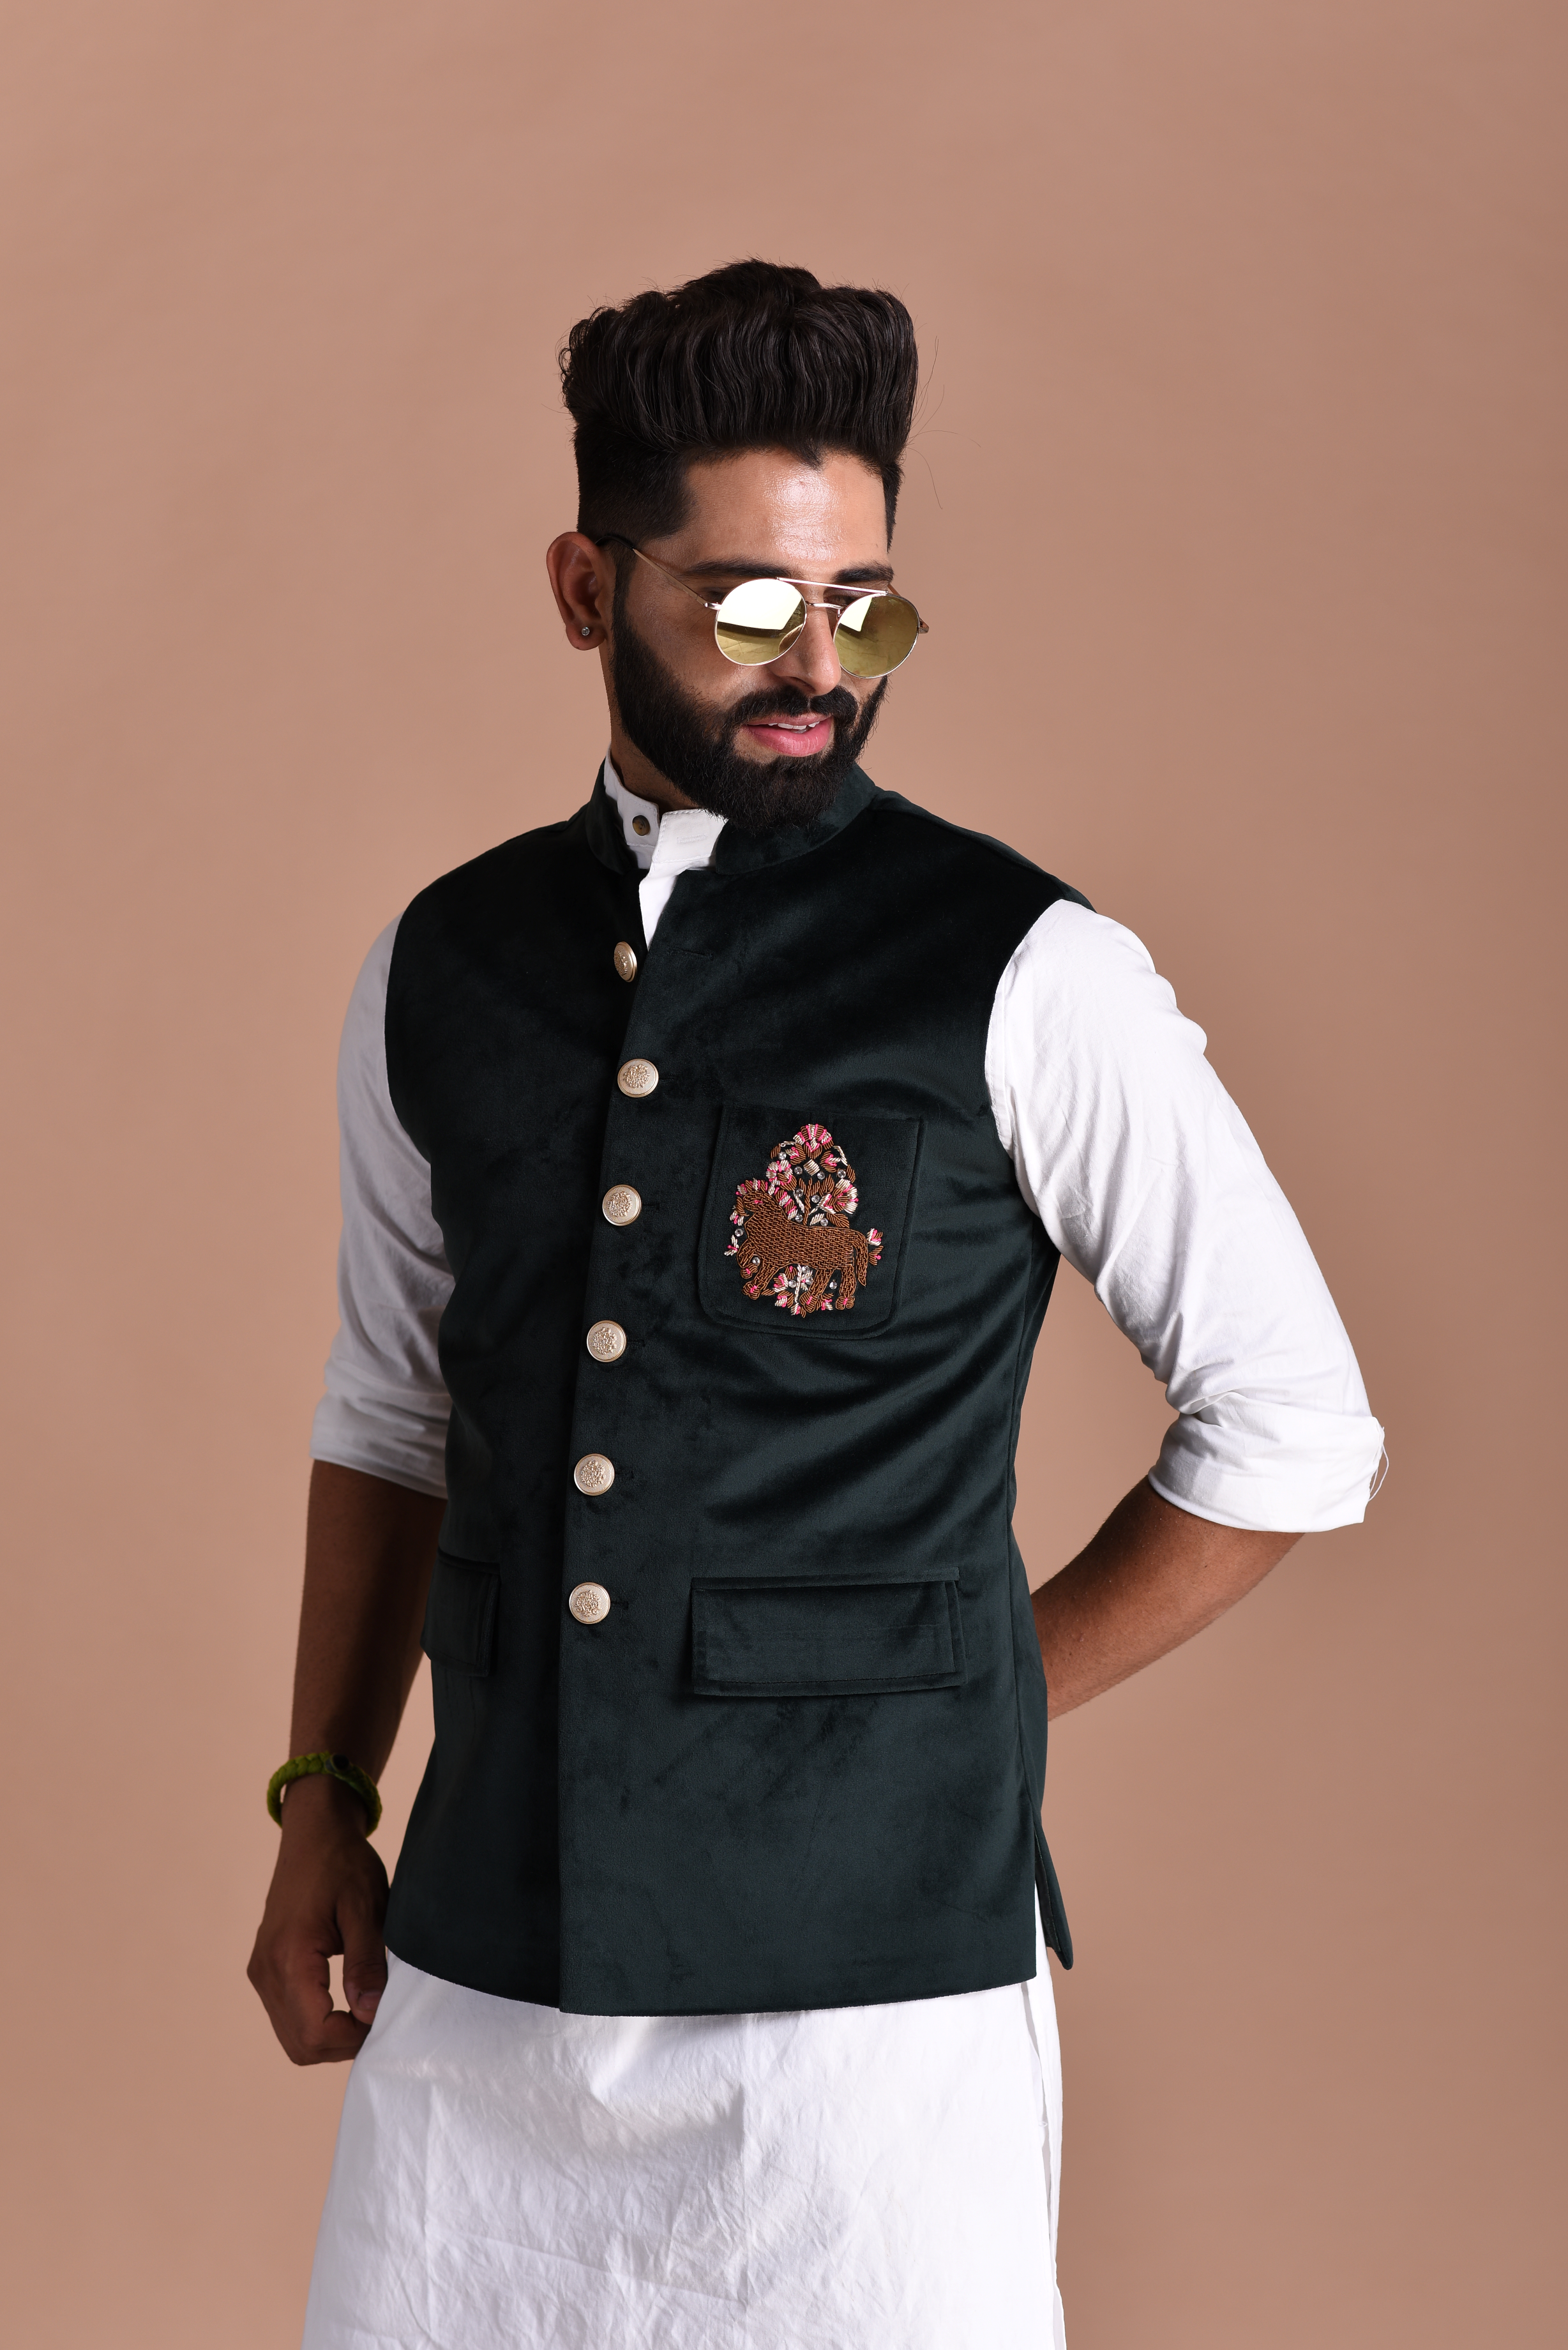 Aesthetic Hand-Embroidered Royal Horse Velvet Jodhpuri Half Jacket with White Kurta Pajama Set | Dark Green Color | Free Personalization |